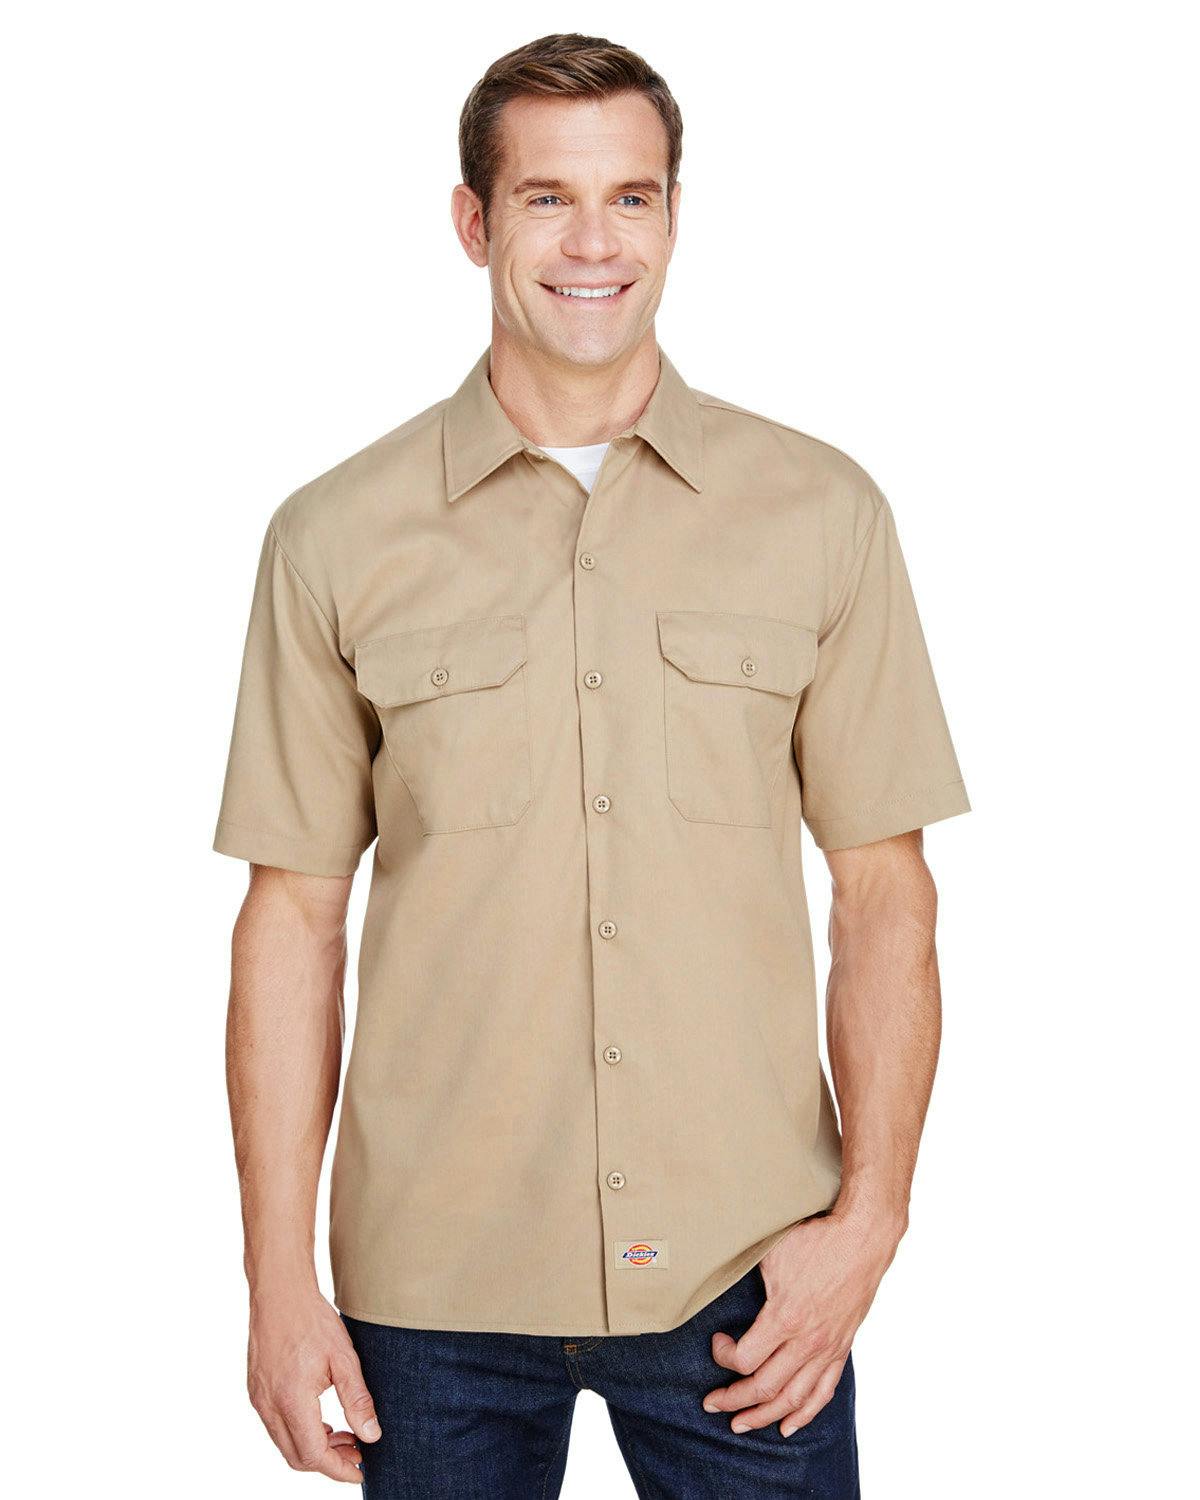 Image for Men's FLEX Short-Sleeve Twill Work Shirt